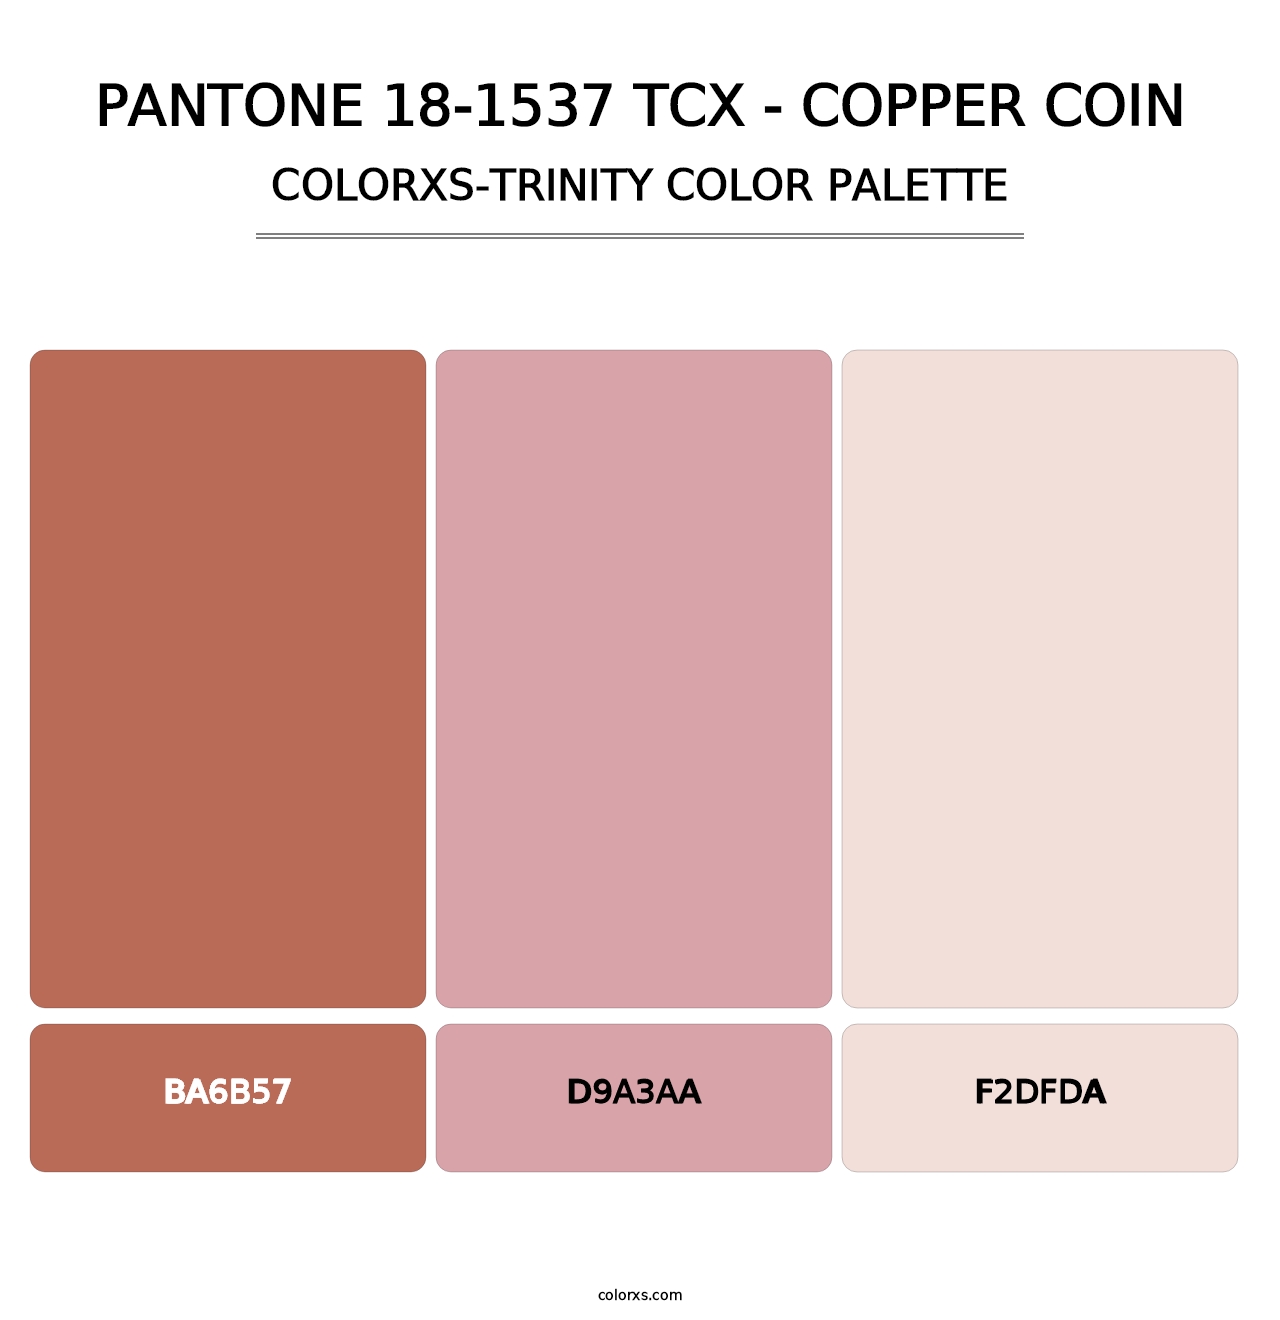 PANTONE 18-1537 TCX - Copper Coin - Colorxs Trinity Palette